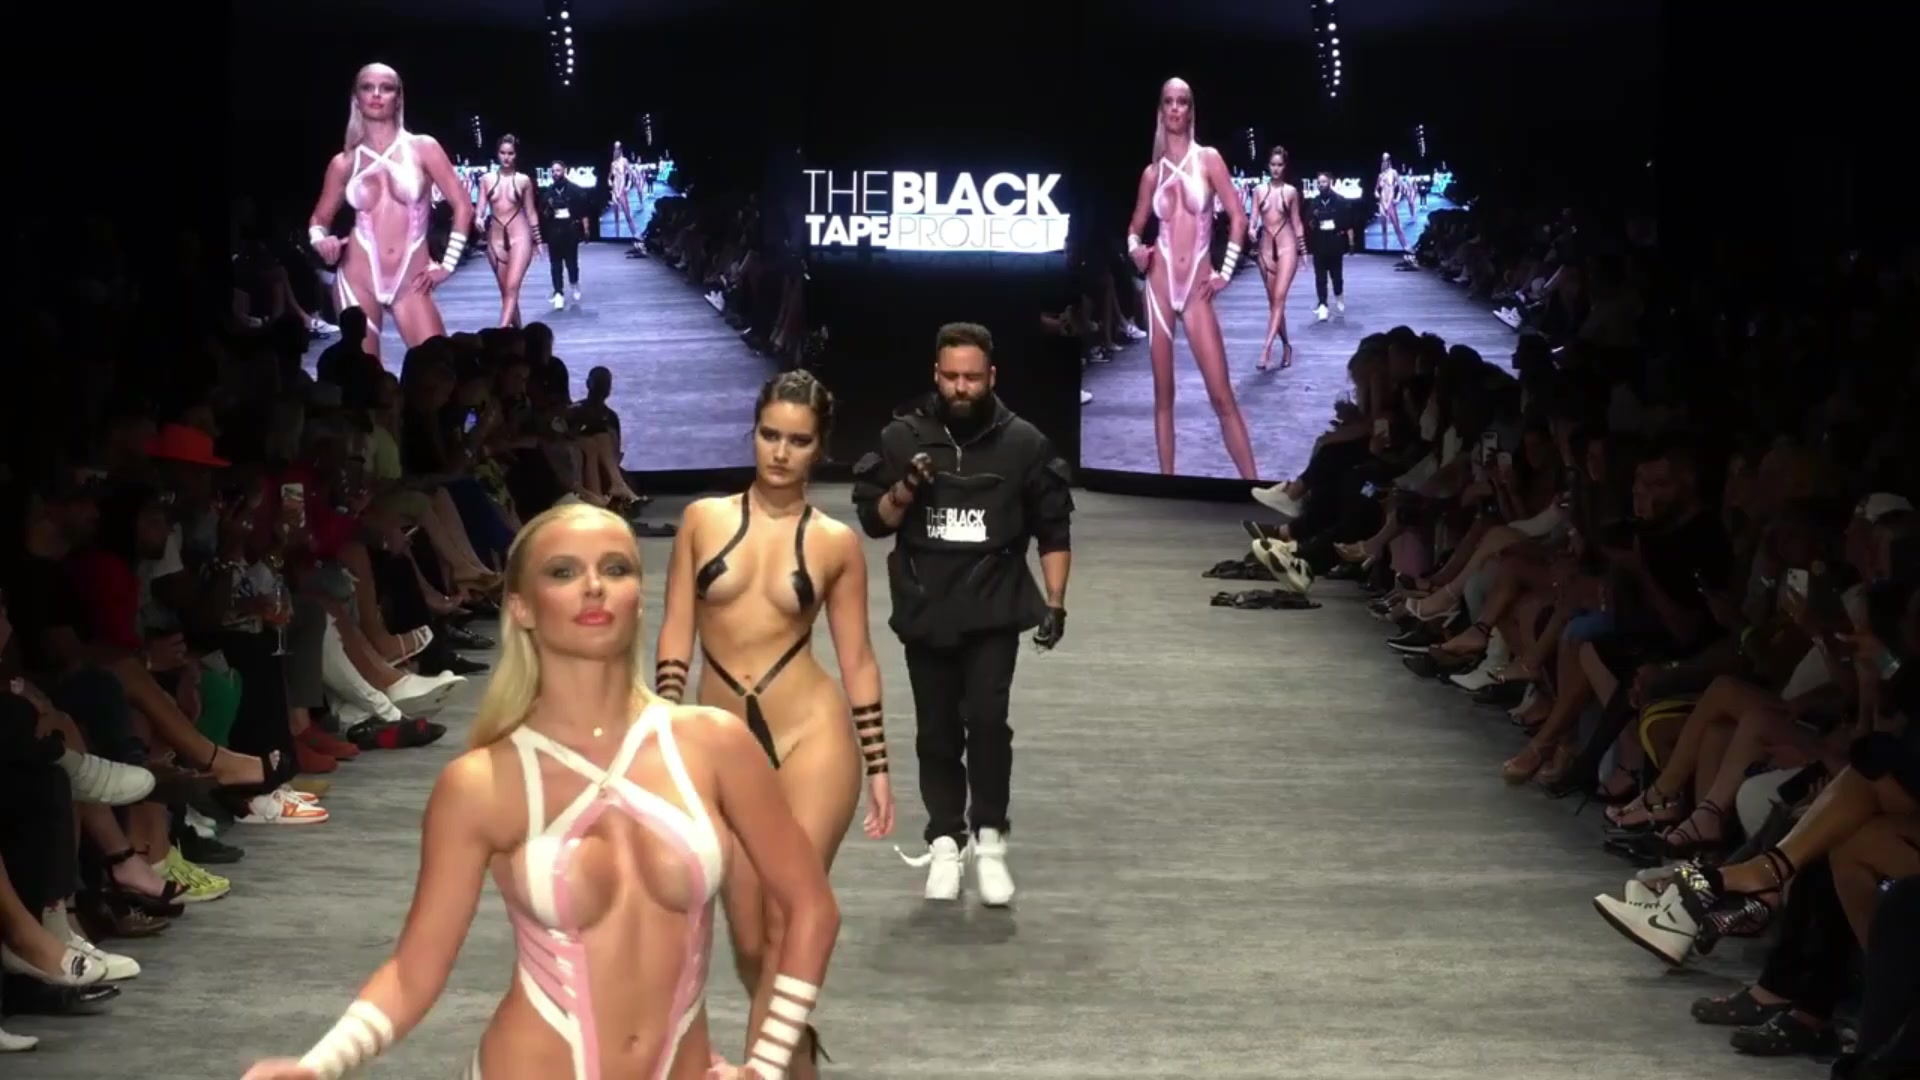 Black Tape Project show at Miami Swim fashion Week – New York Daily News